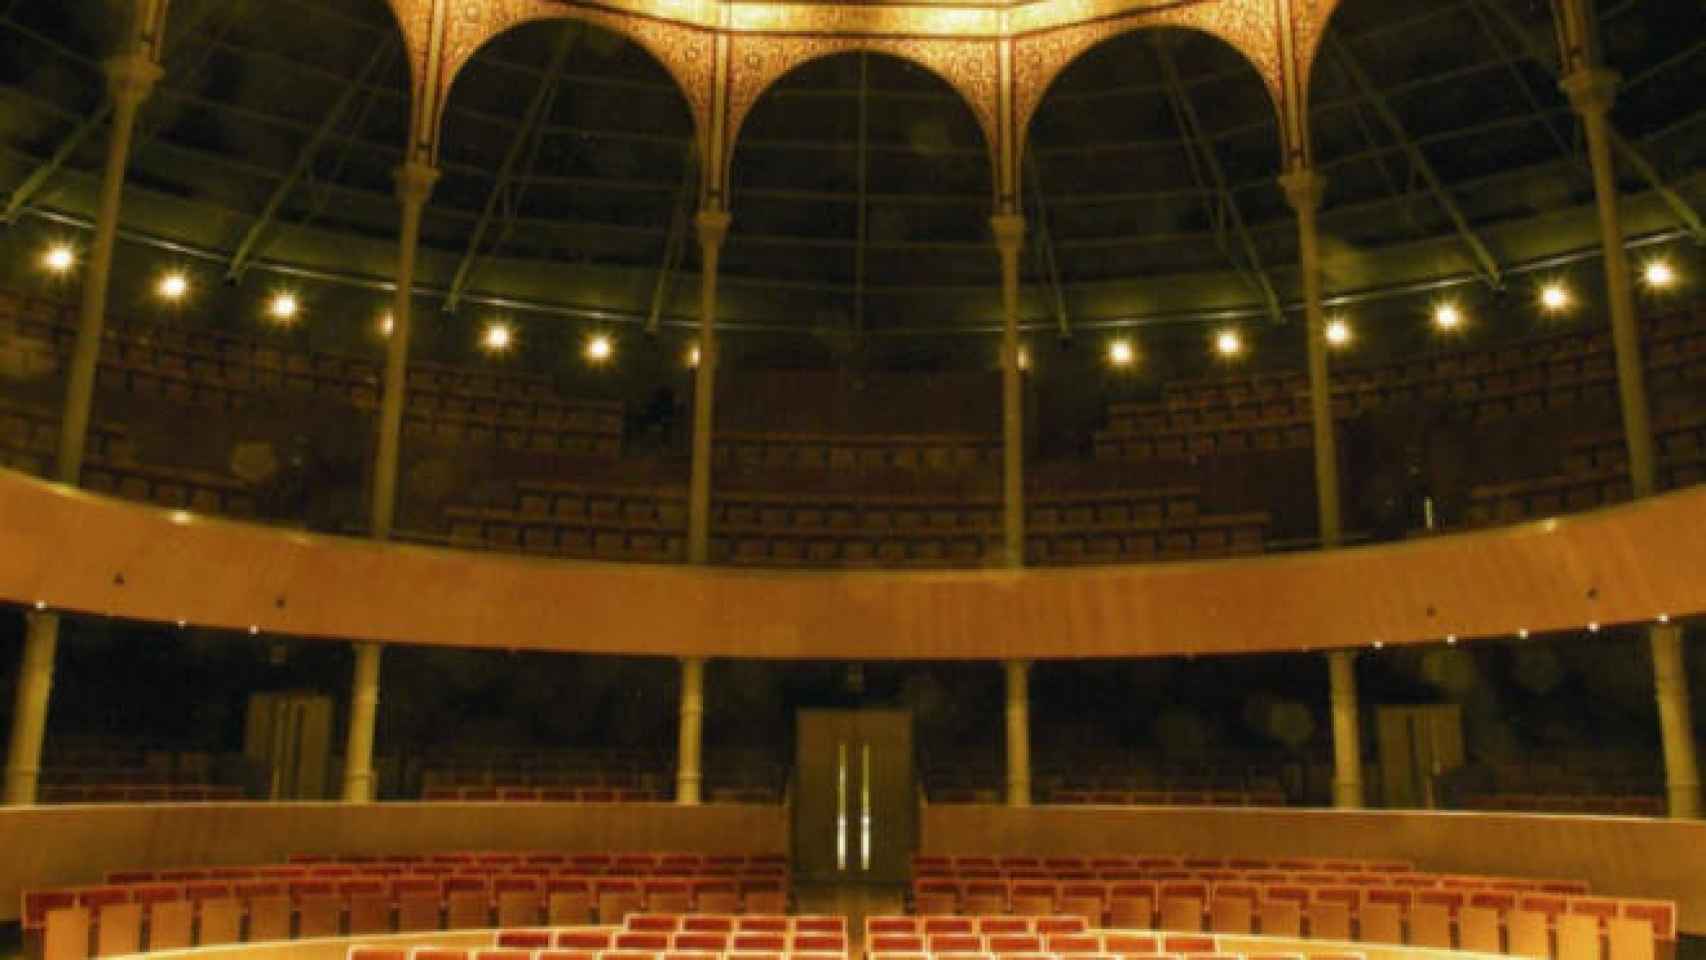 Teatro Circo de Albacete